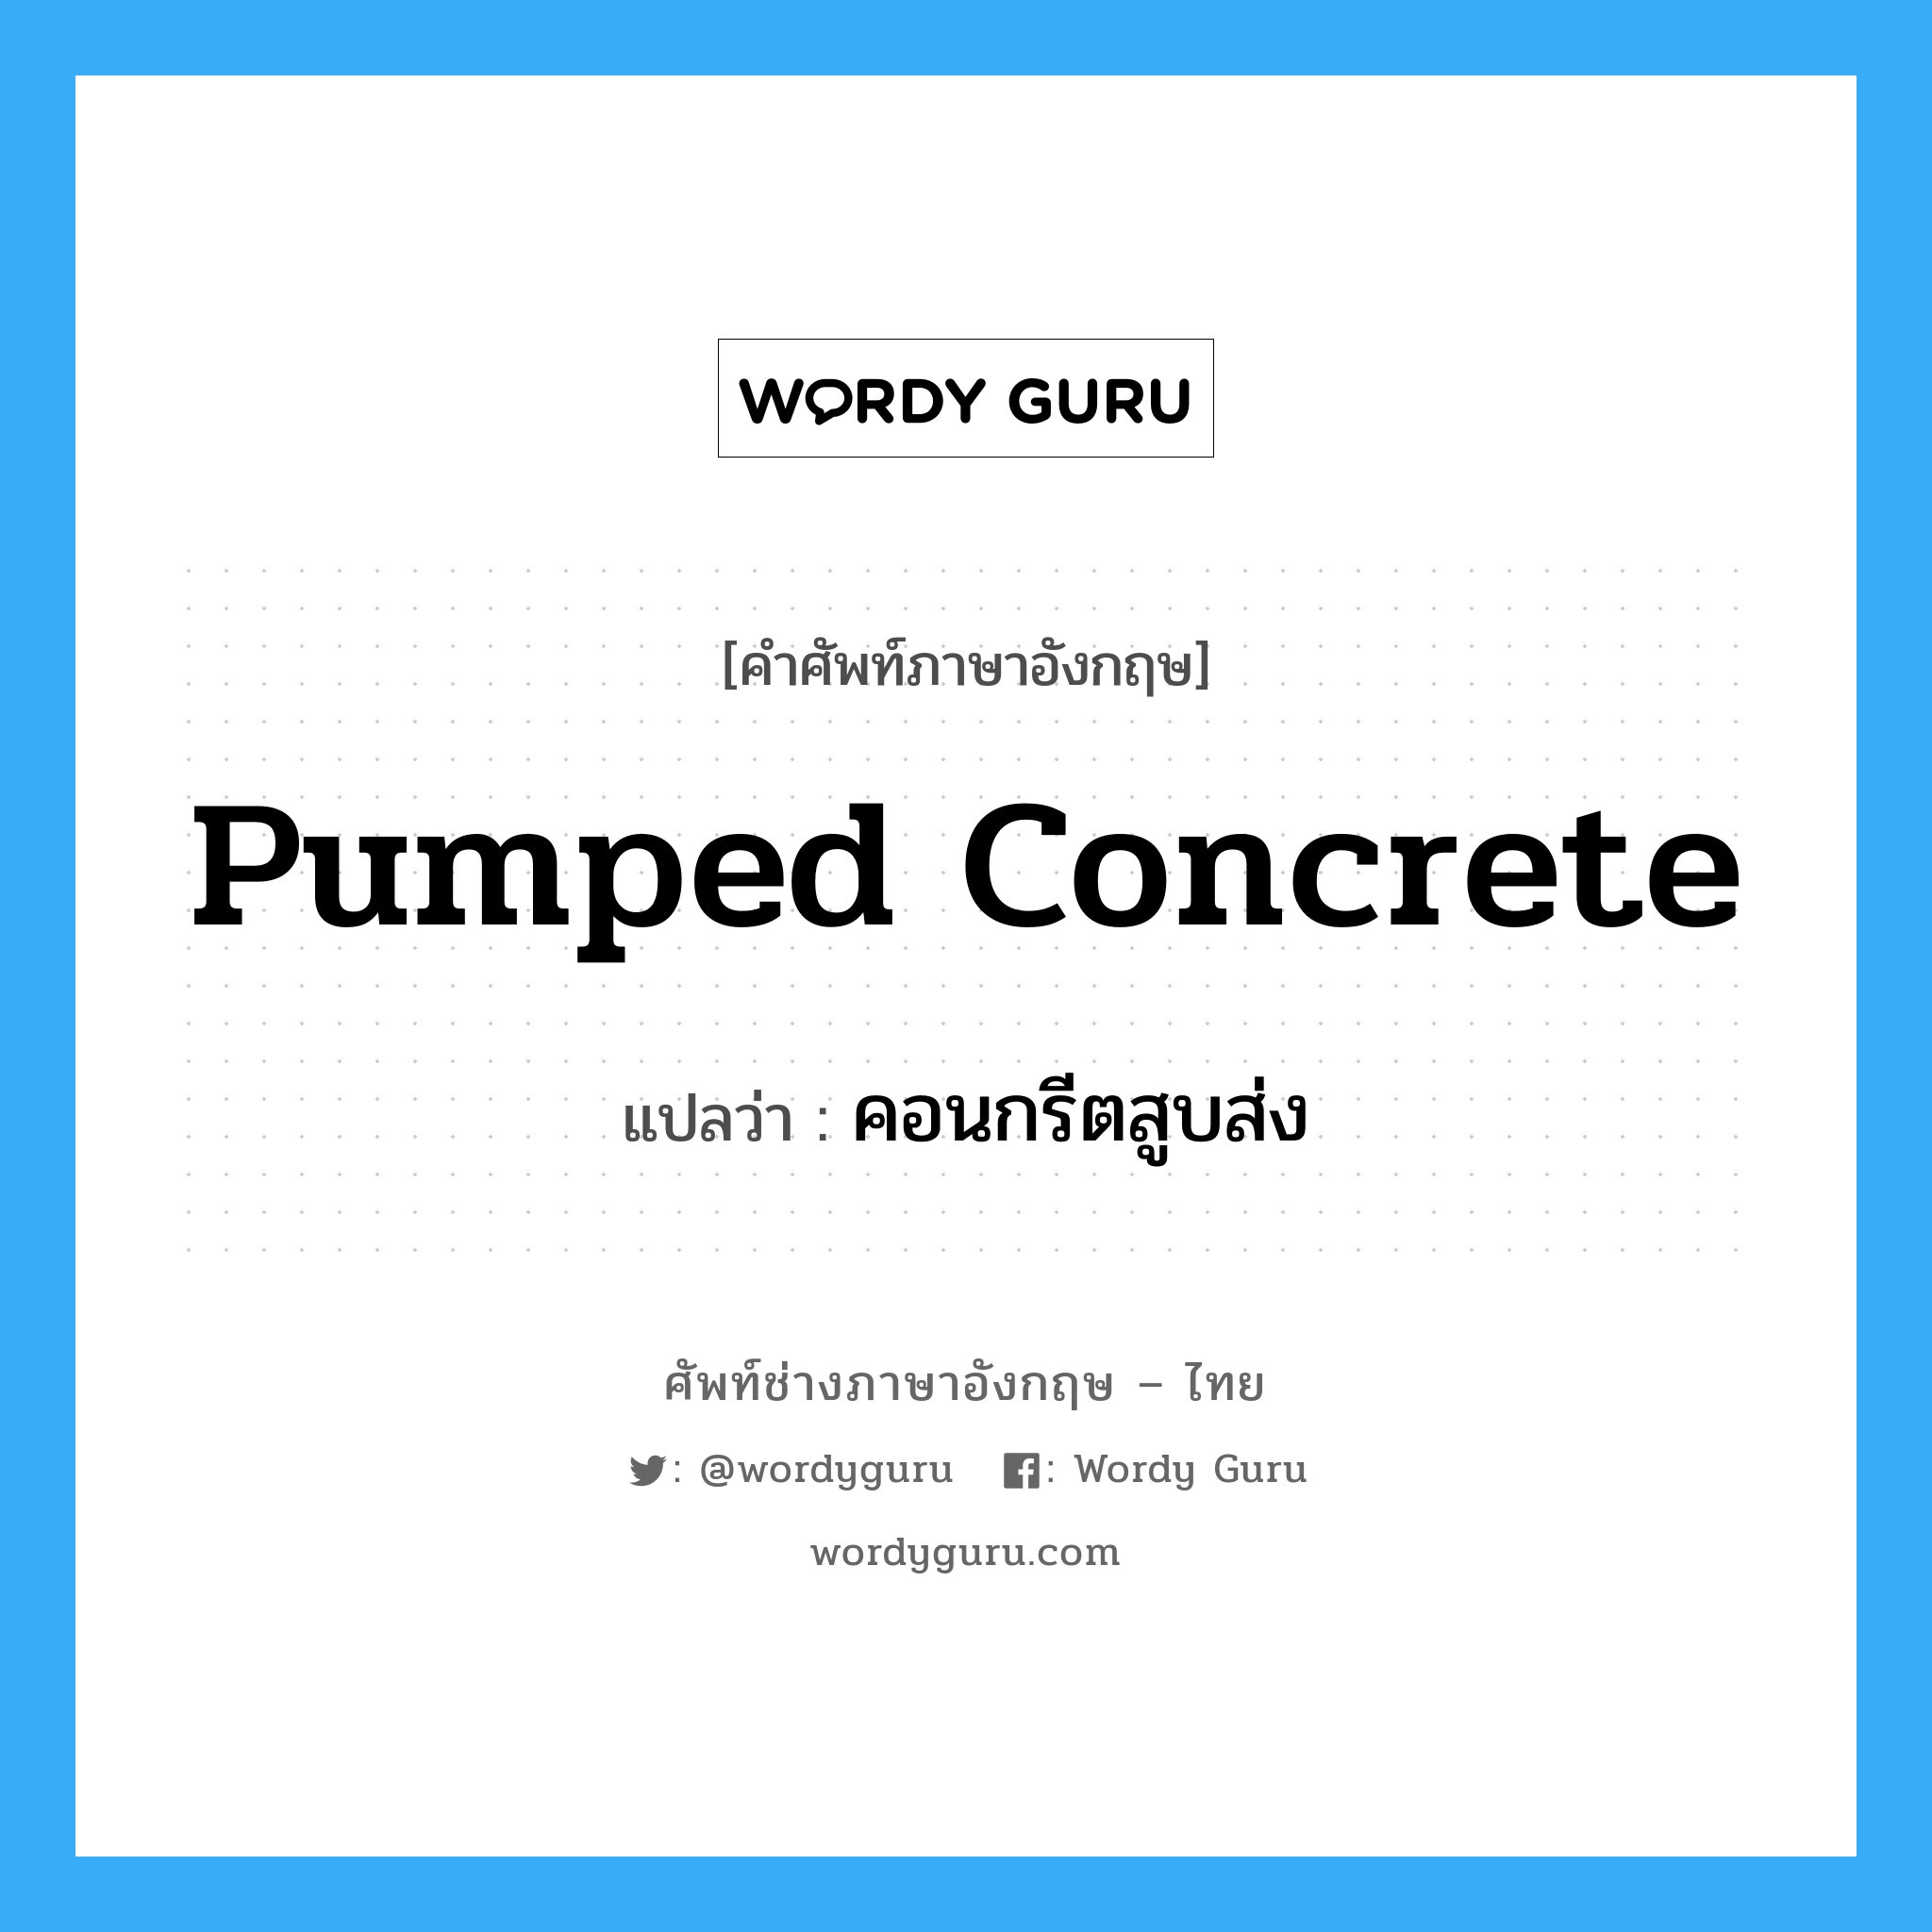 pumped concrete แปลว่า?, คำศัพท์ช่างภาษาอังกฤษ - ไทย pumped concrete คำศัพท์ภาษาอังกฤษ pumped concrete แปลว่า คอนกรีตสูบส่ง